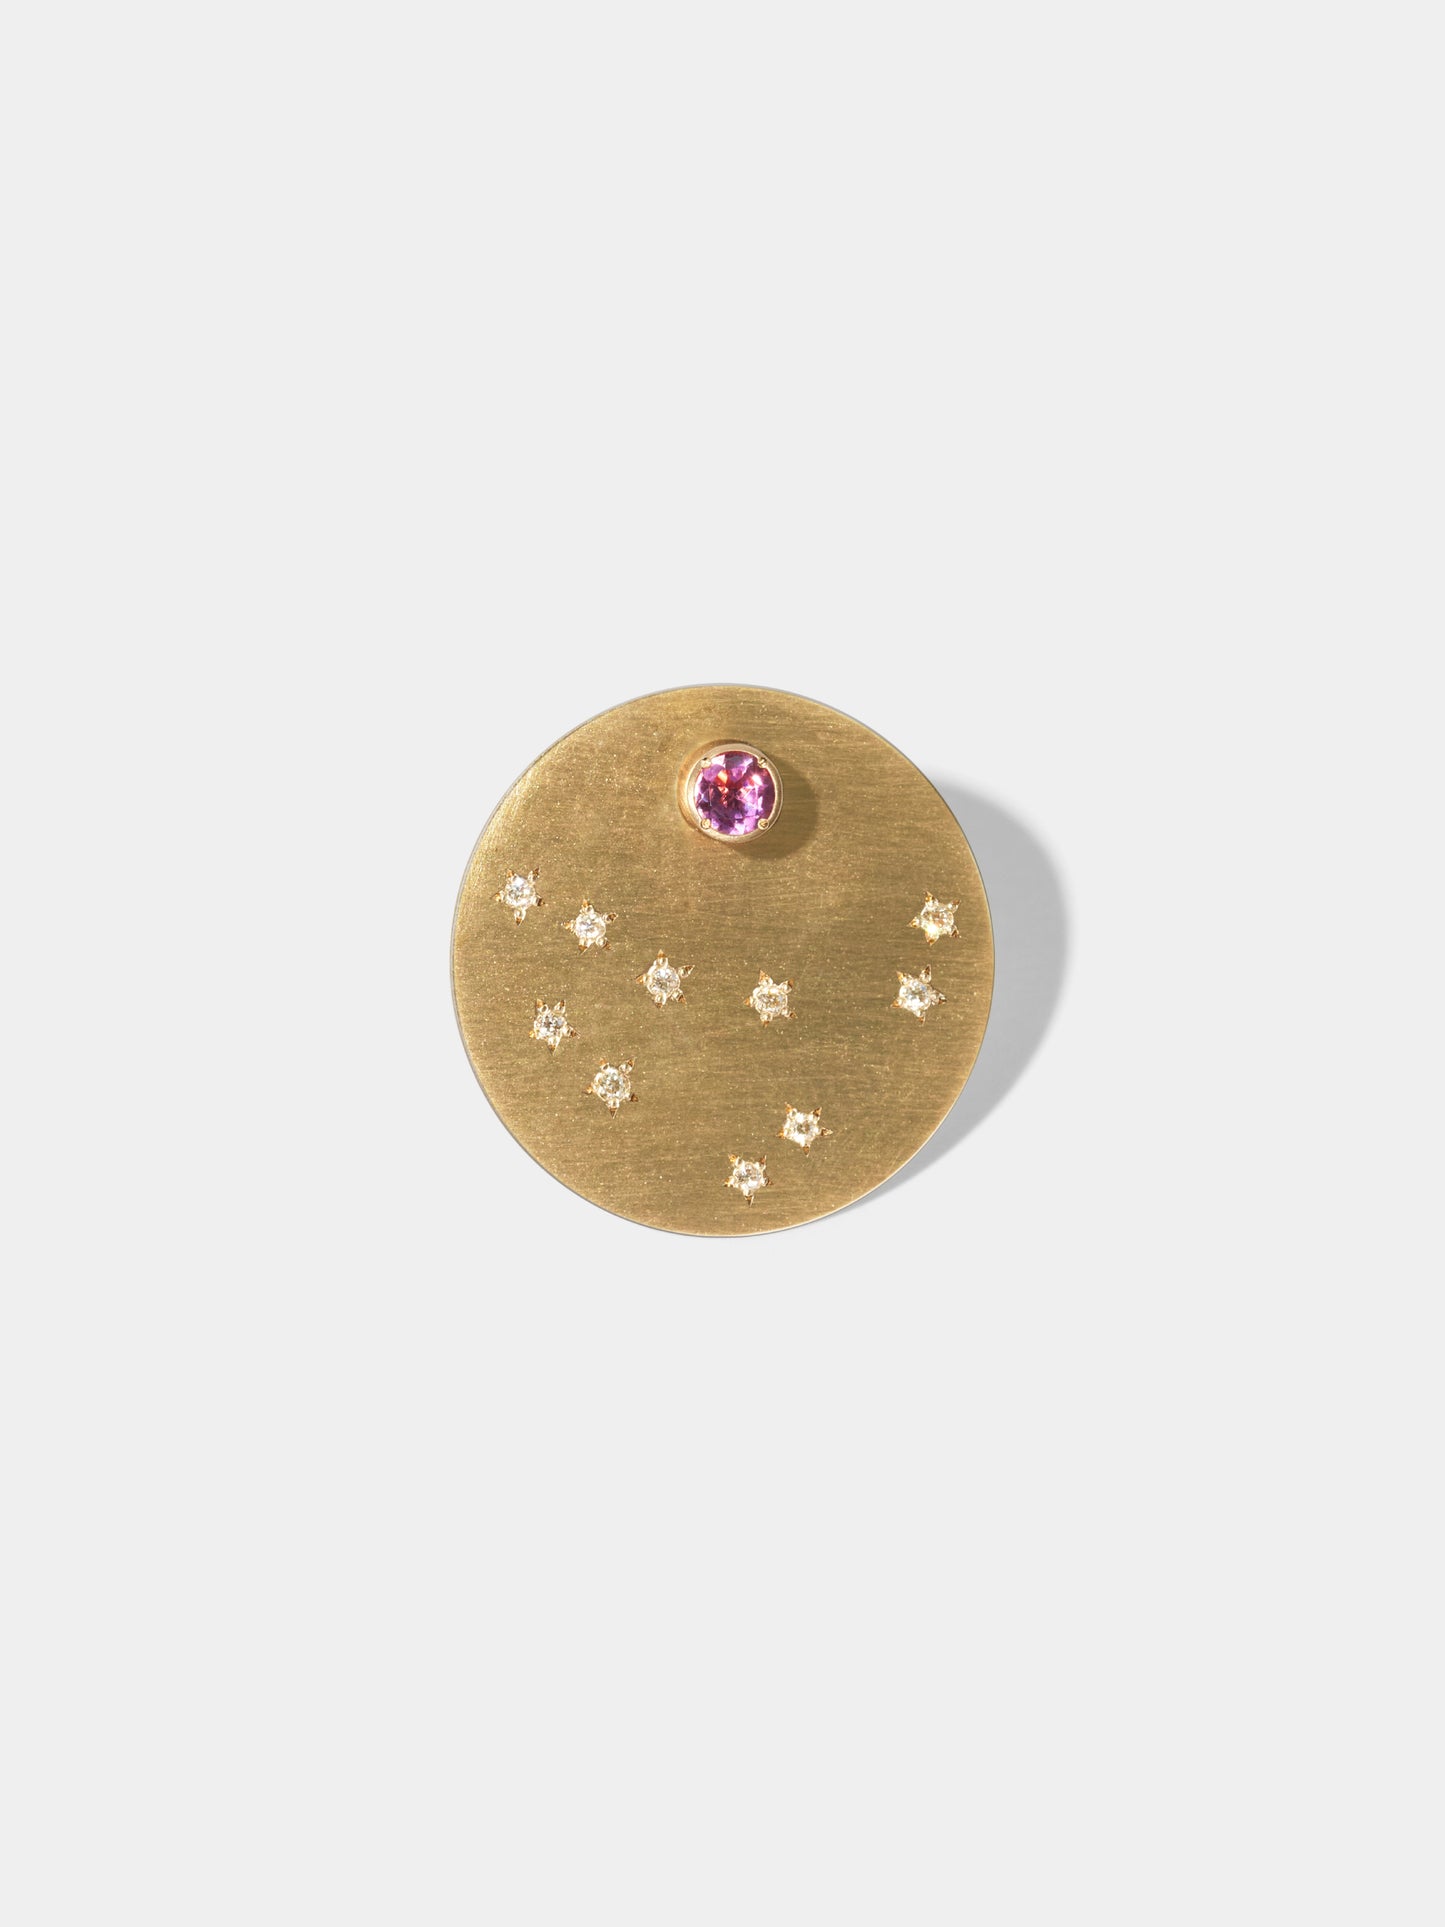 ASTERISM_Pierced Earring_Capricorn(山羊座) / Pink Tourmaline